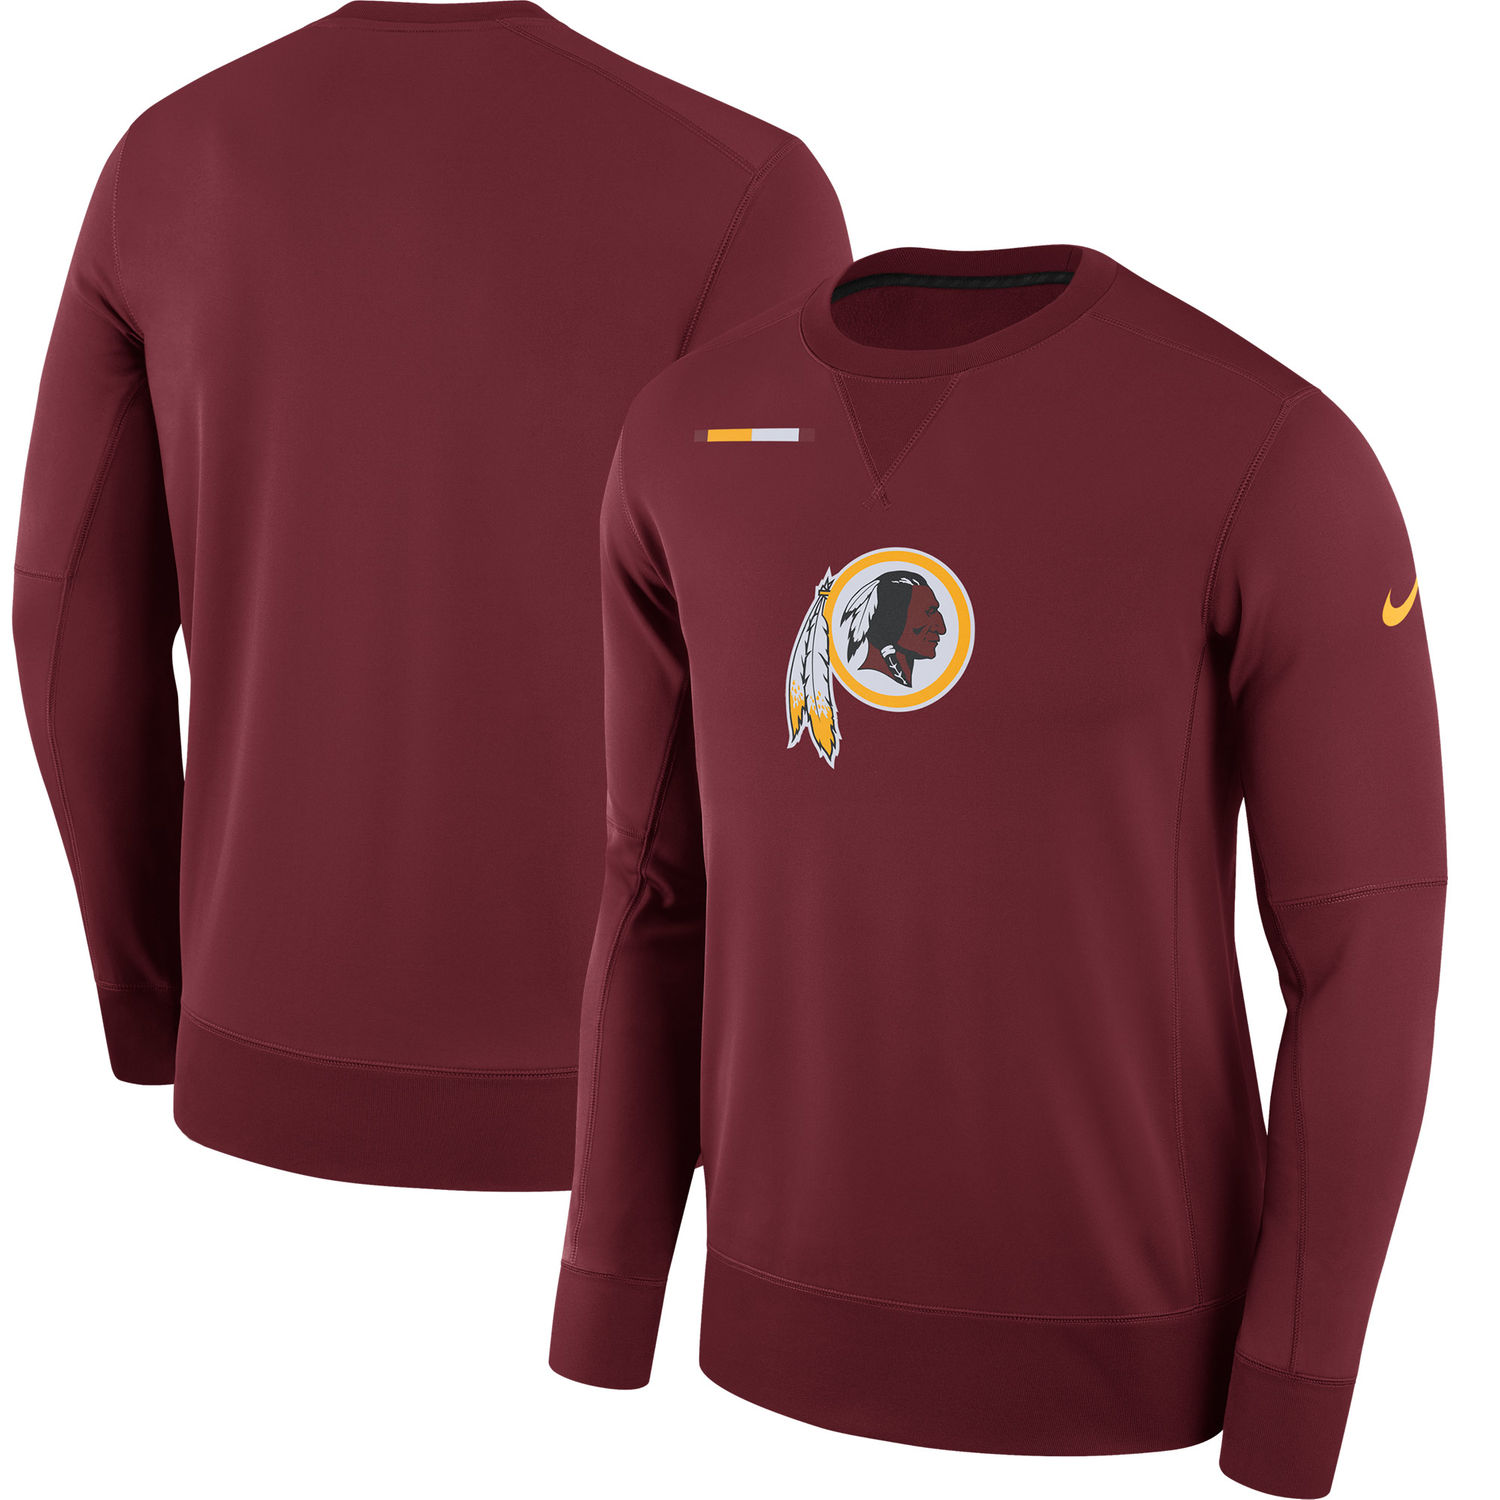 Mens Washington Redskins Nike Burgundy Sideline Team Logo Performance Sweatshirt